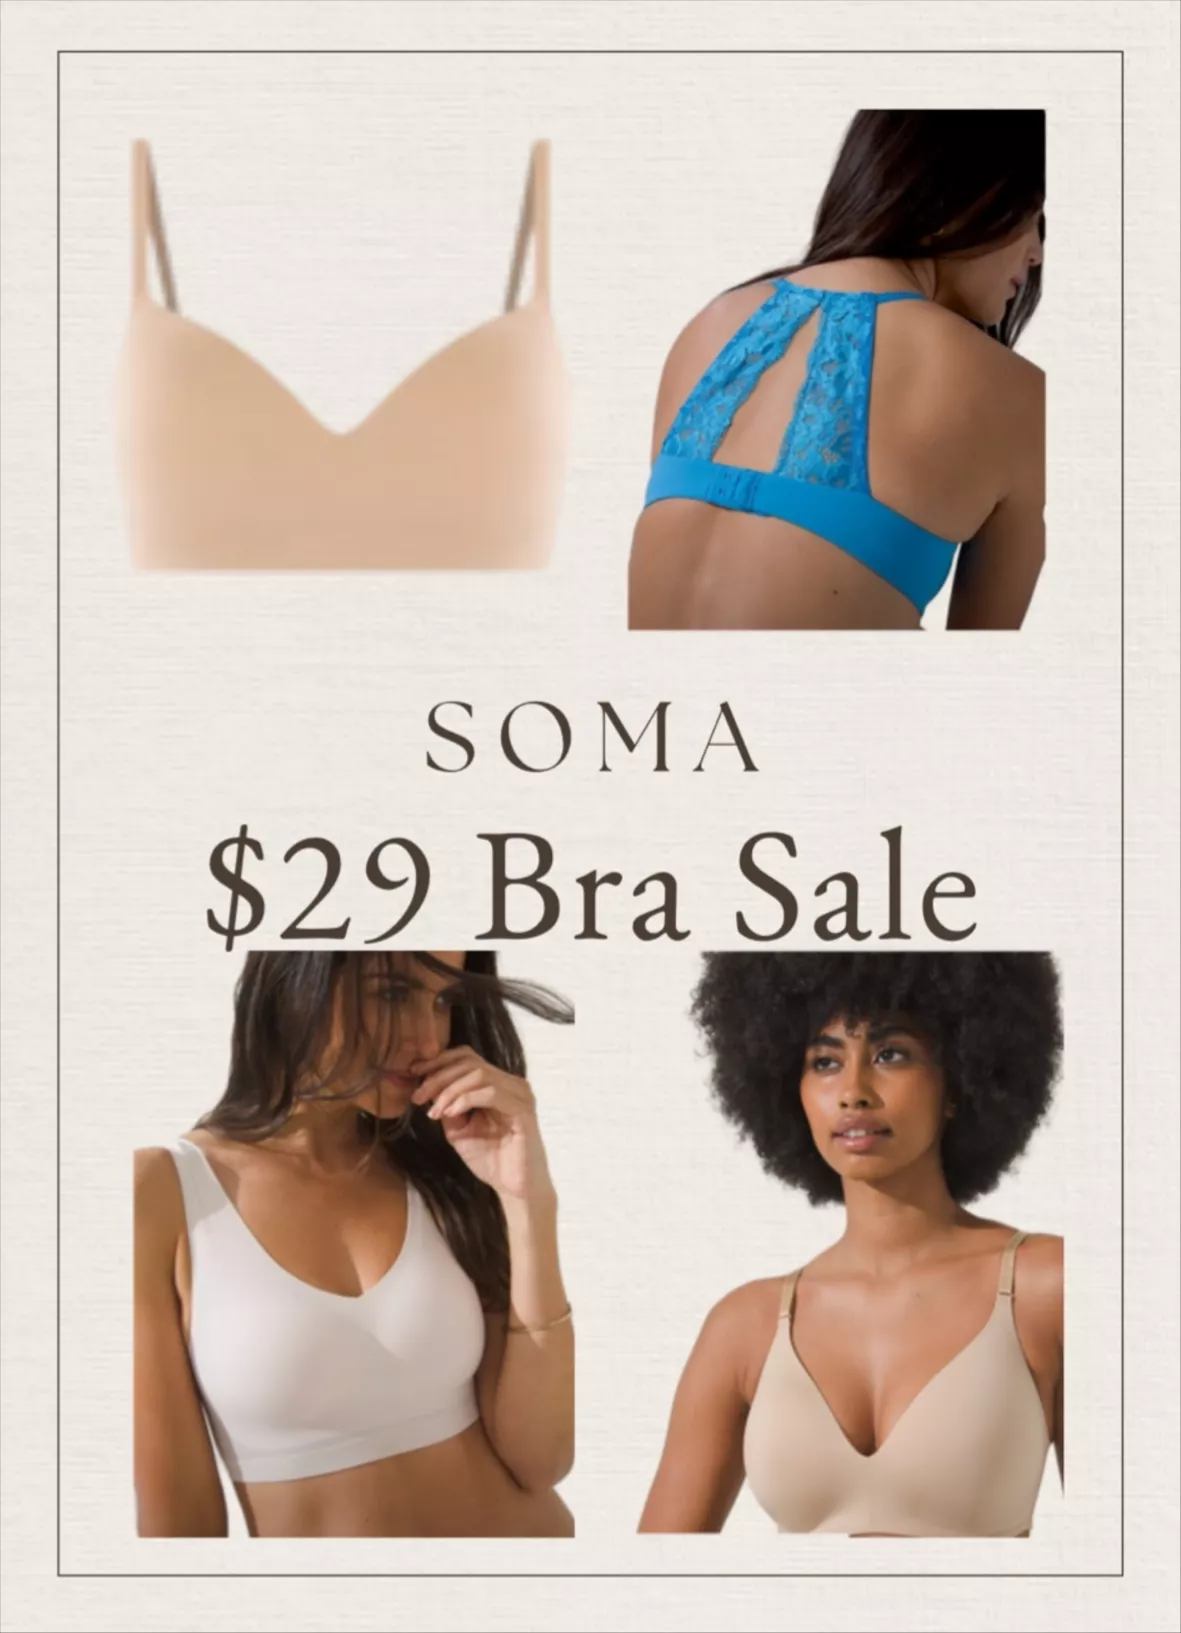 Shop Women's Bras on Sale - Bralettes, Wireless, Racerback & More - Soma